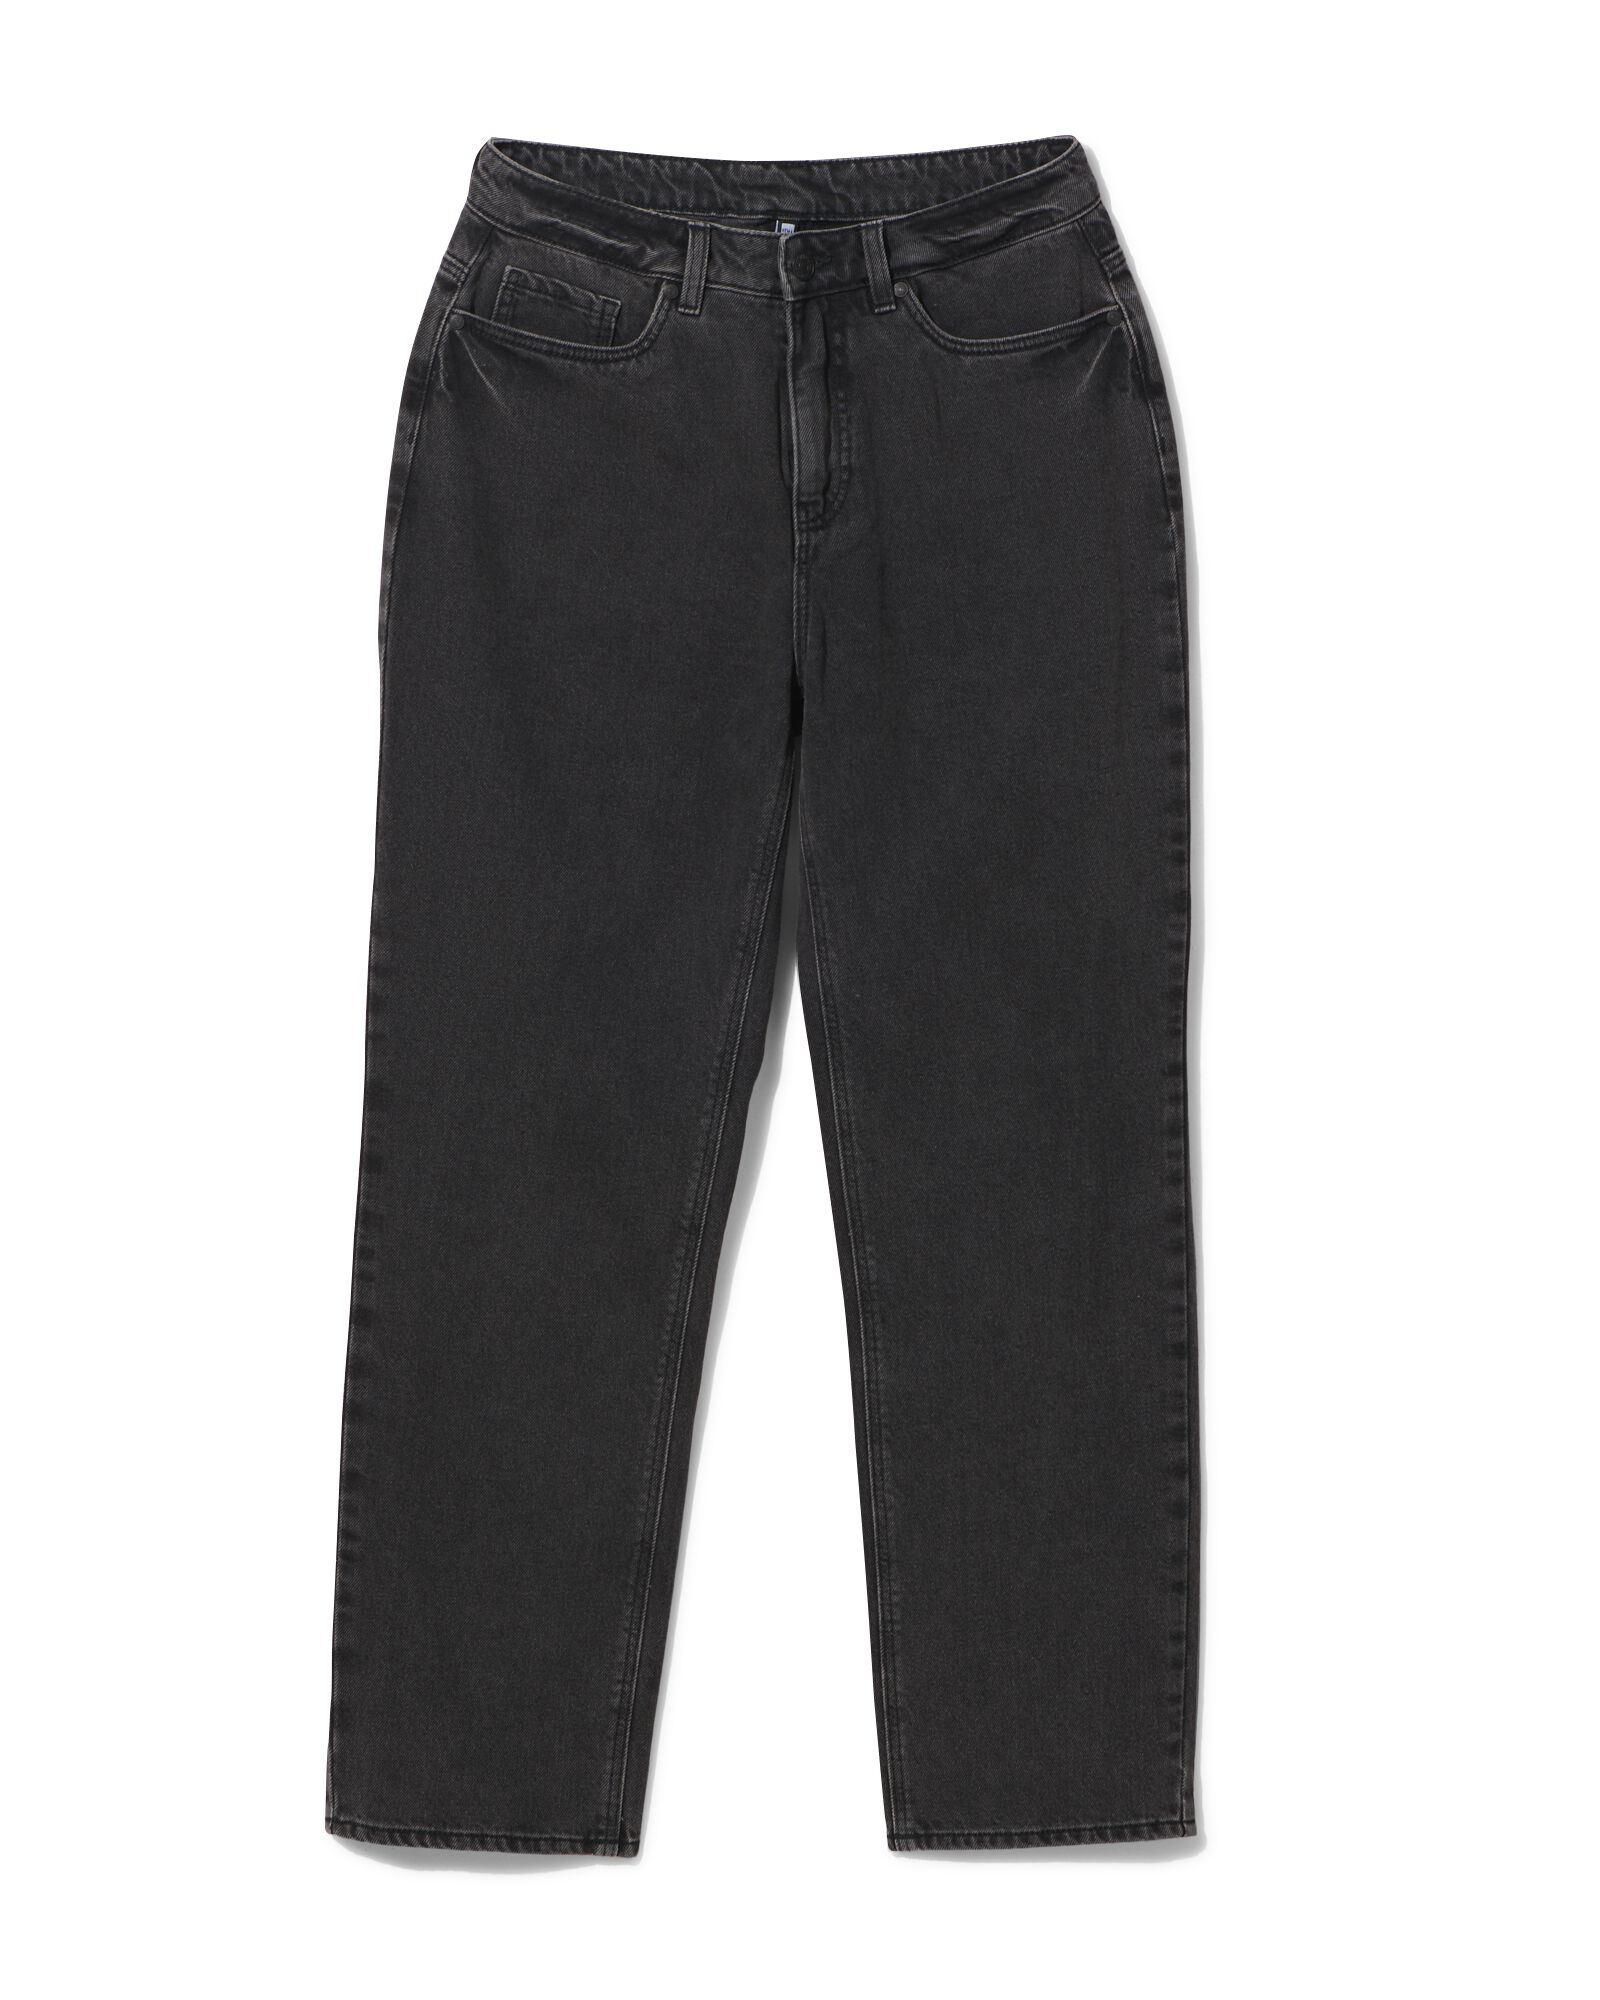 Damen-Jeans, Straight Fit dunkelgrau 40 - 36319983 - HEMA